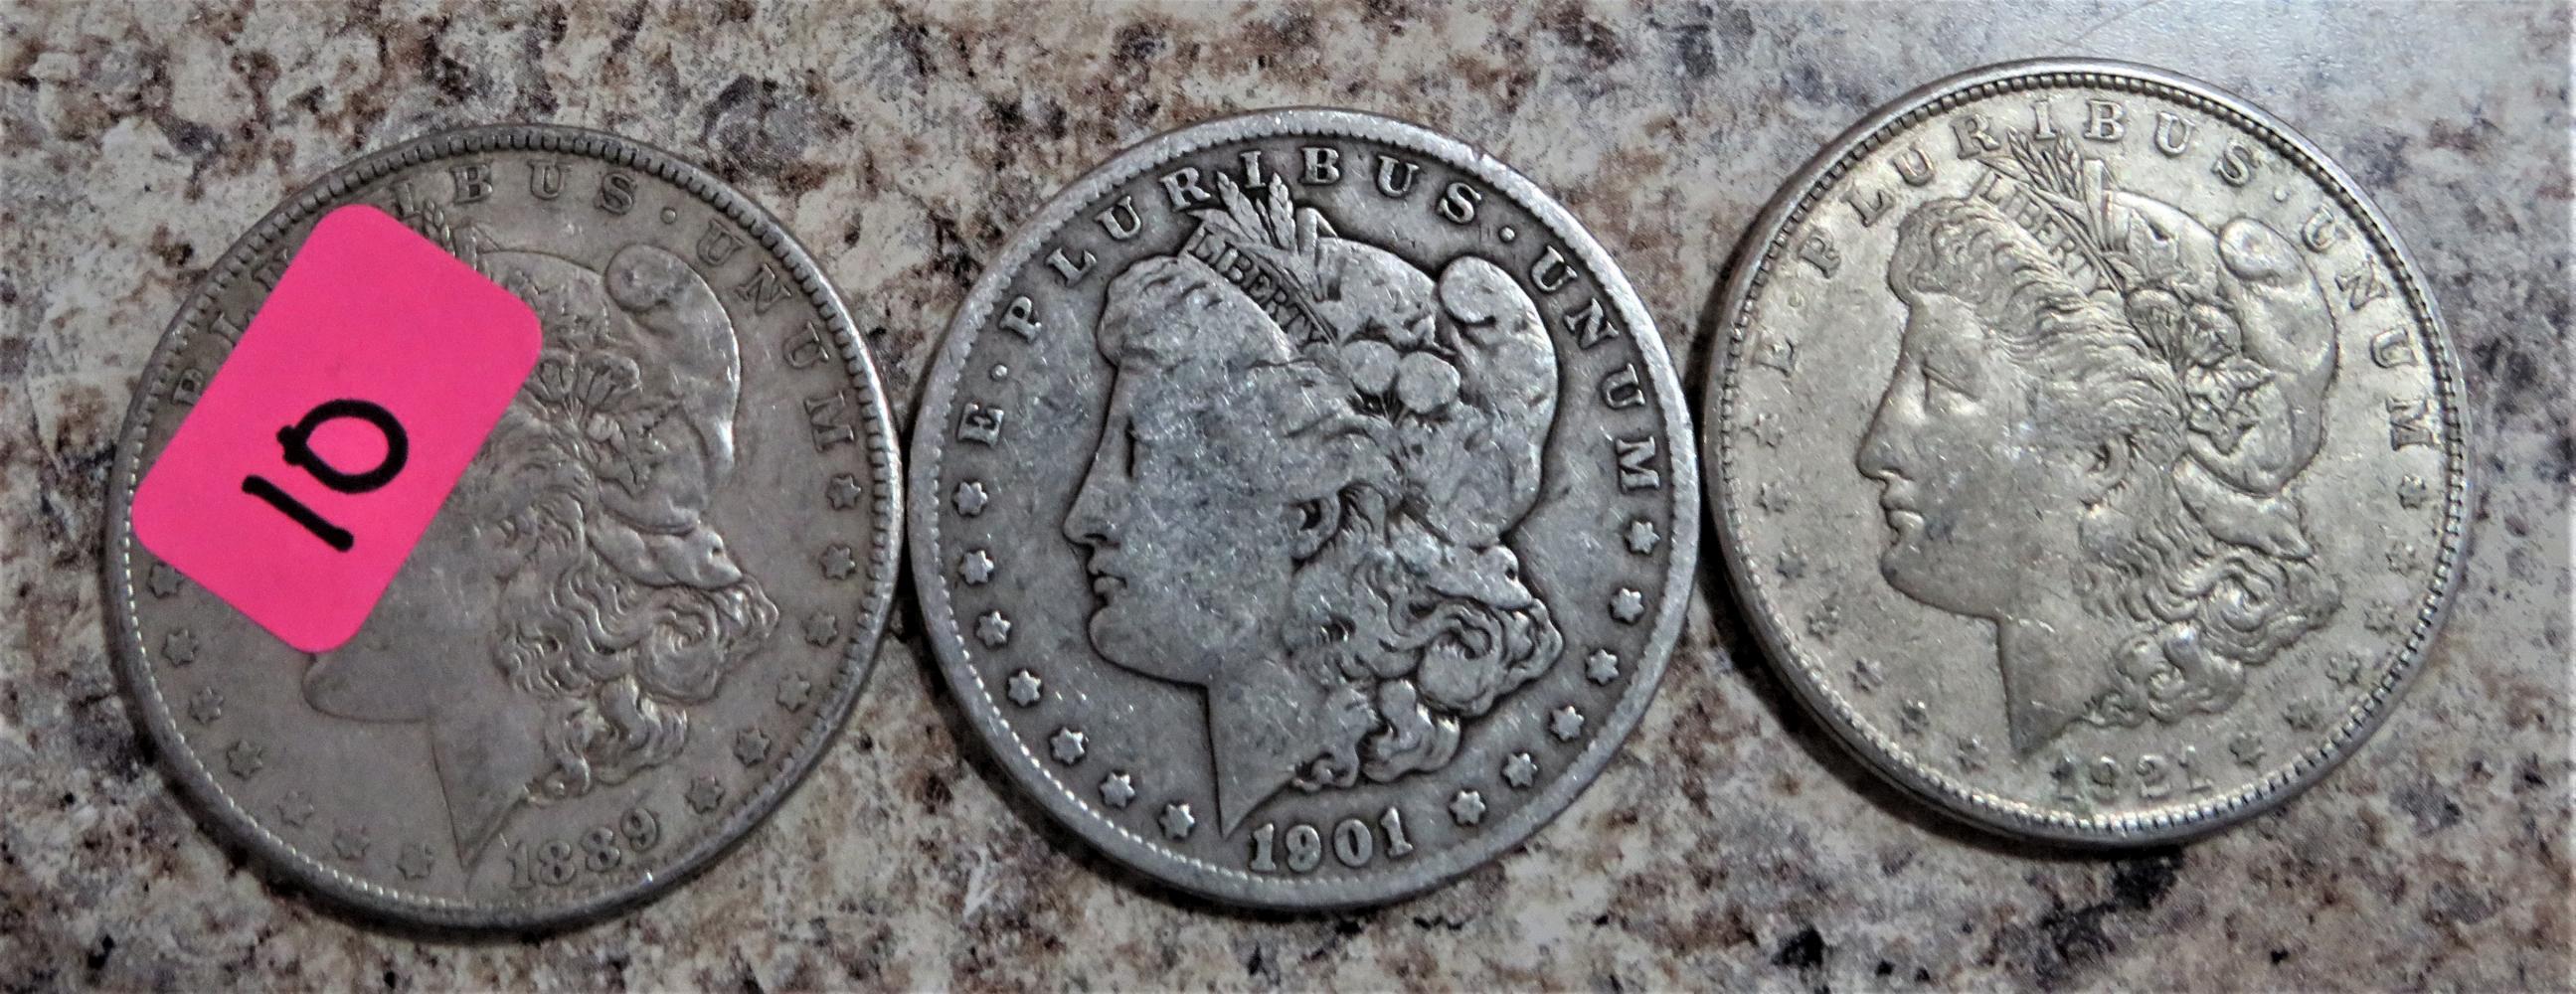 1889, 1901-O, 1921-S Morgan Dollars